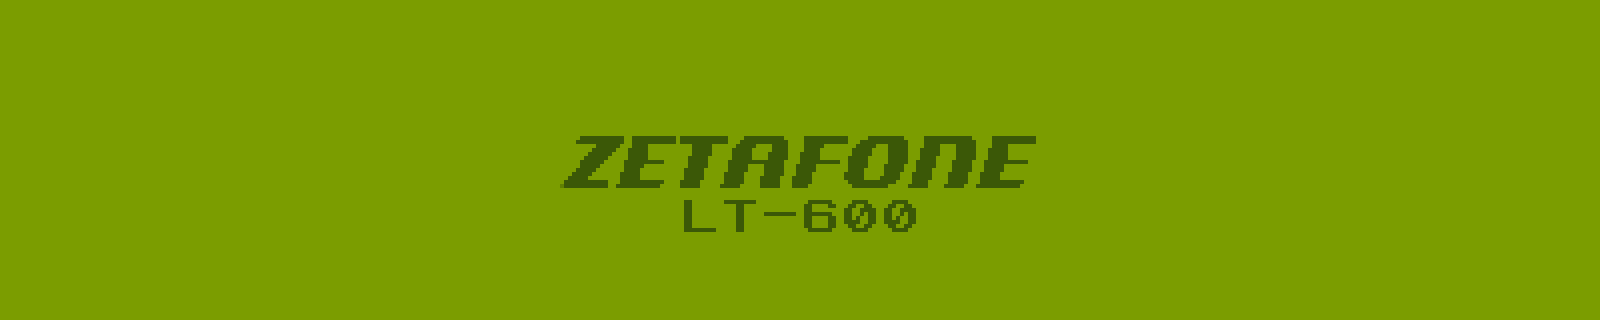 Zetafone LT-600 Simulator